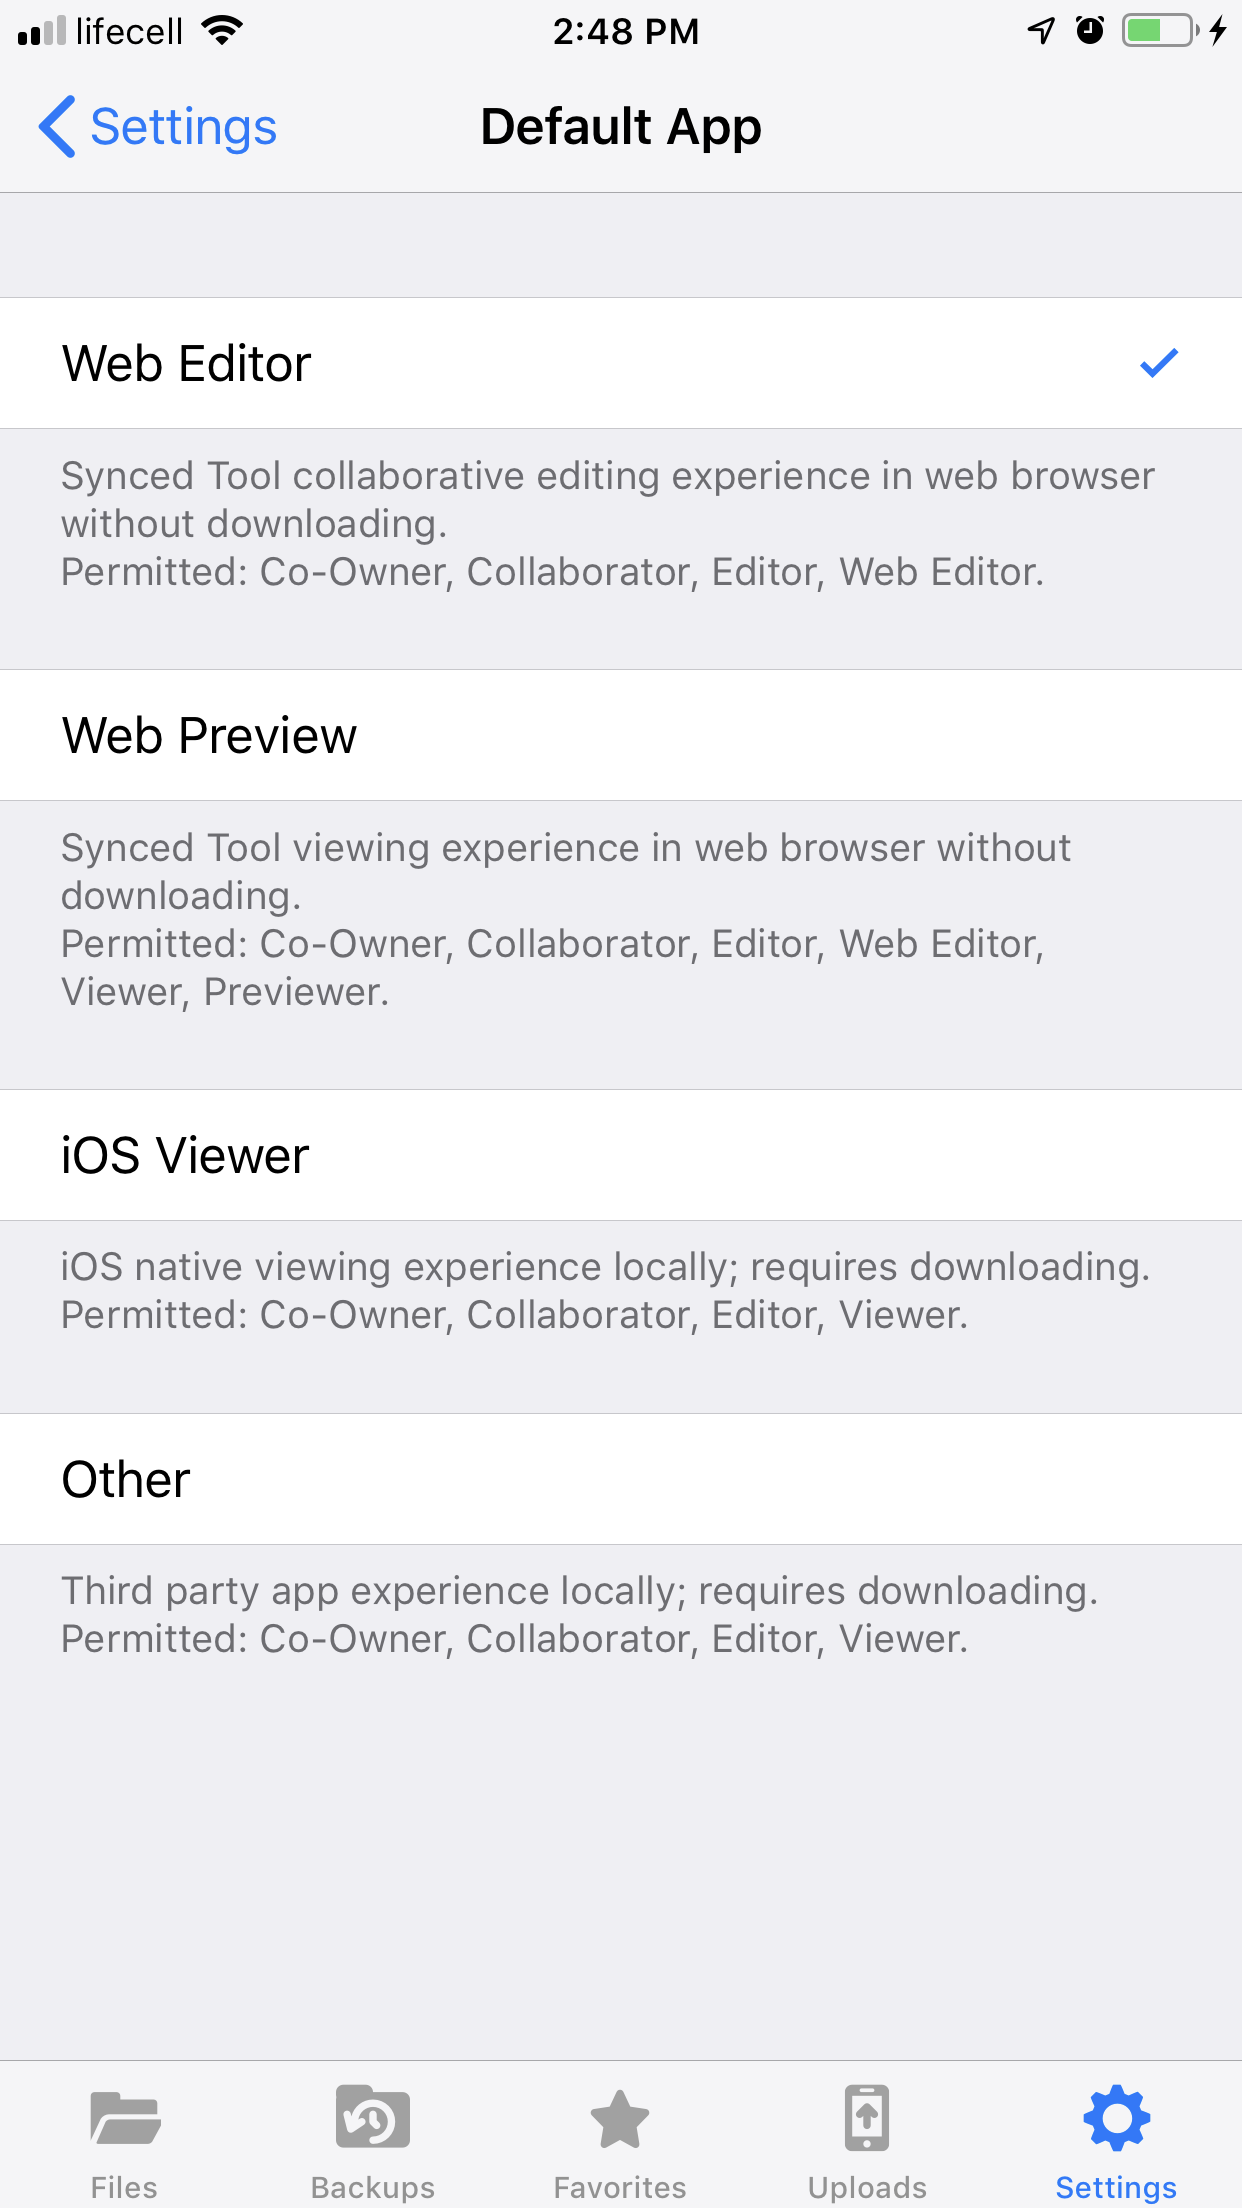 vboxxcloud ios app update - 2